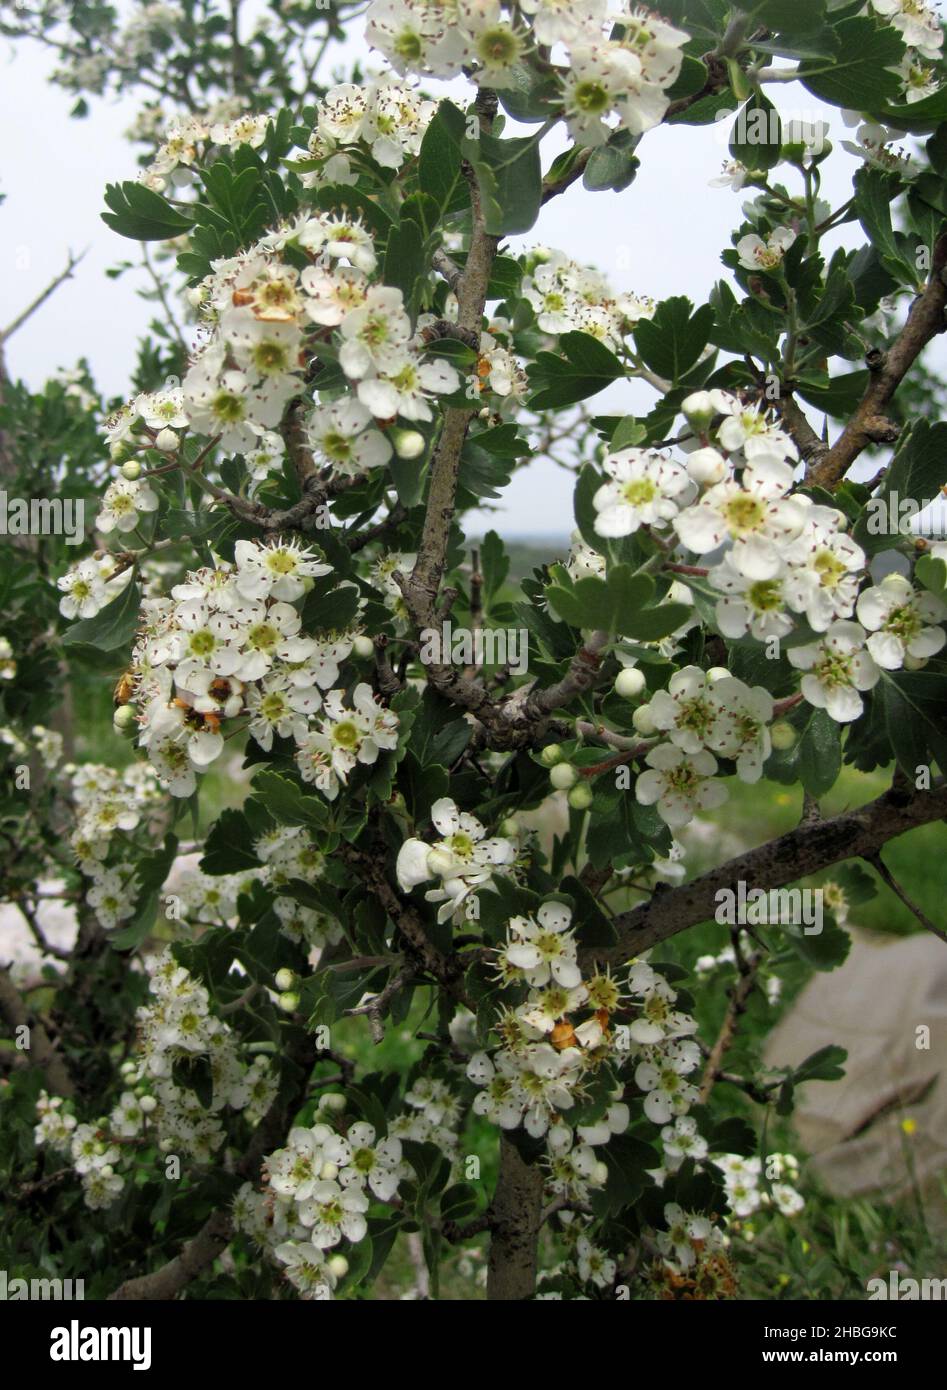 Hawthorn (Crataegus azarolus syn Crataegus aronia) flowers and fruit on a tree. This fruit is also known as azarole,or Mediterranean medlar. It is use Stock Photo